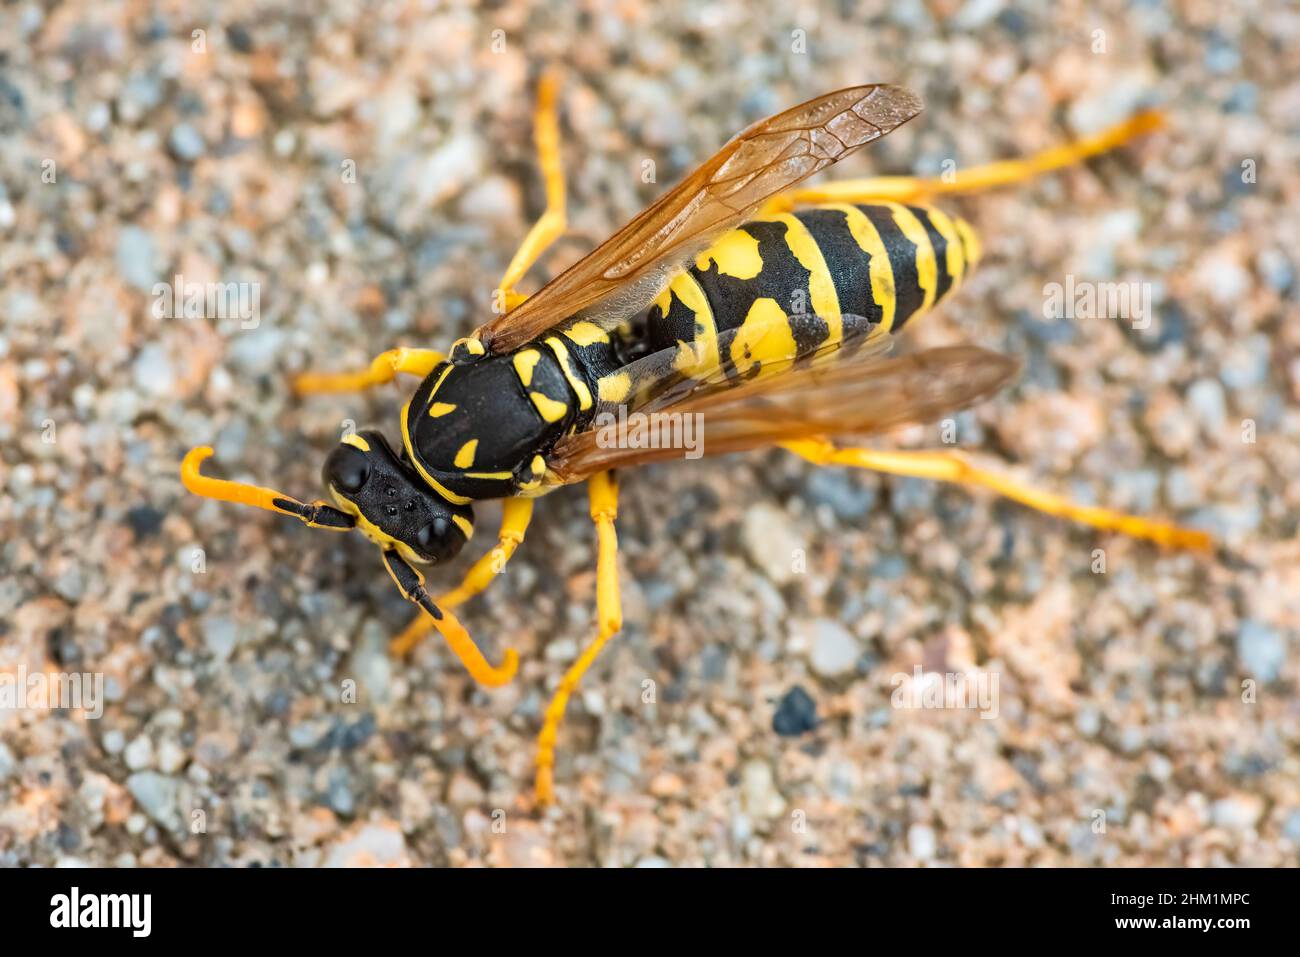 Wasp. Large wasp. Dangerous fly. Stock Photo